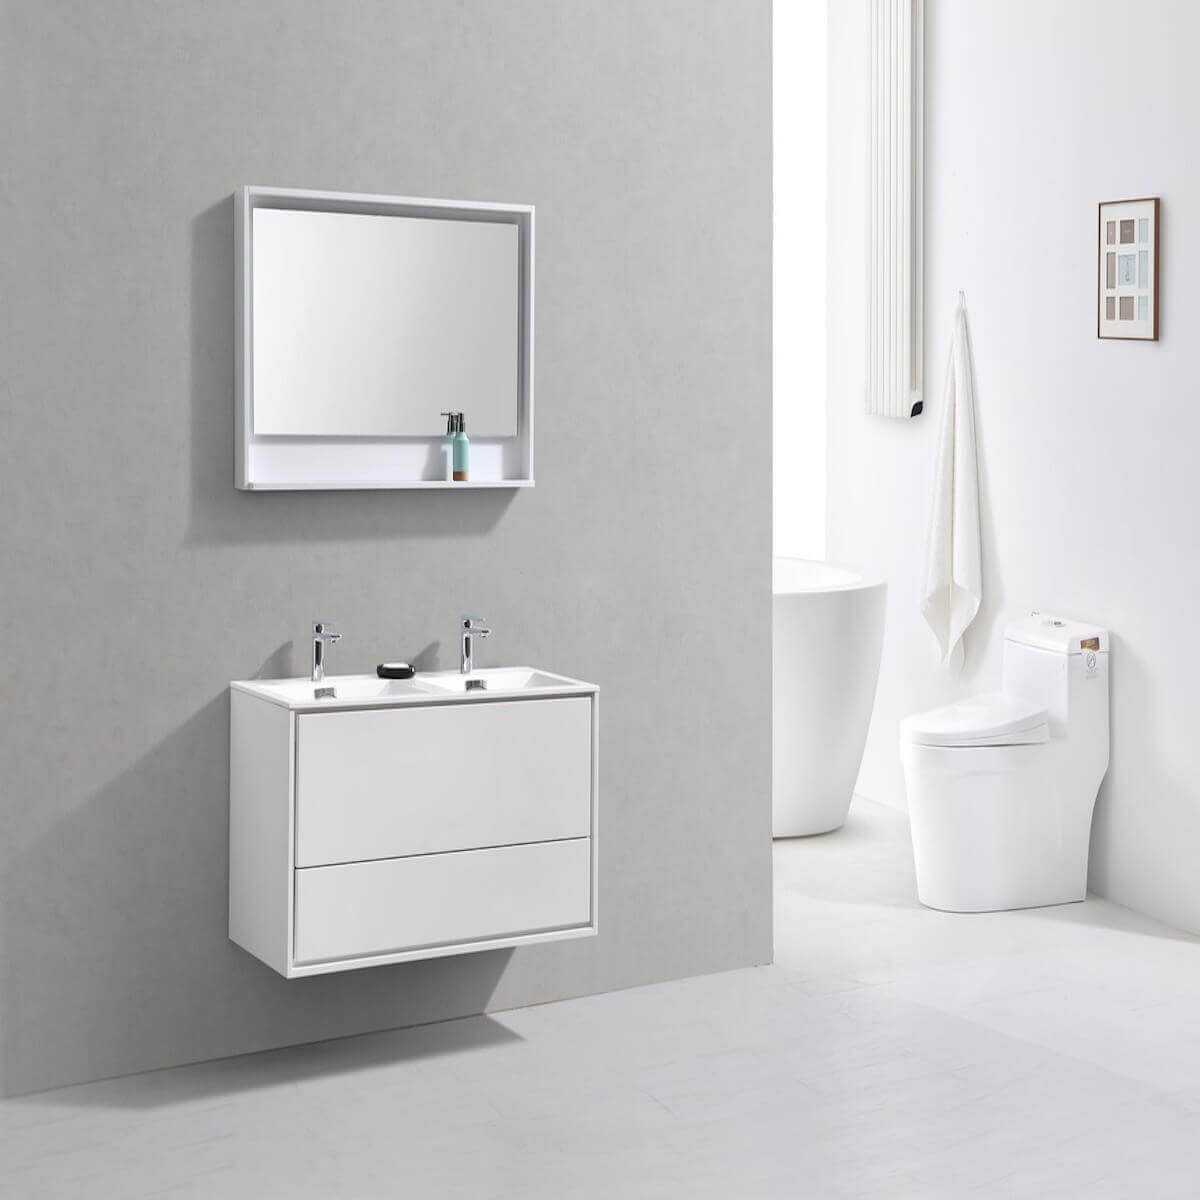 KubeBath DeLusso 48" Gloss White Wall Mount Double Vanity DL48D-GW in Bathroom #finish_high gloss white